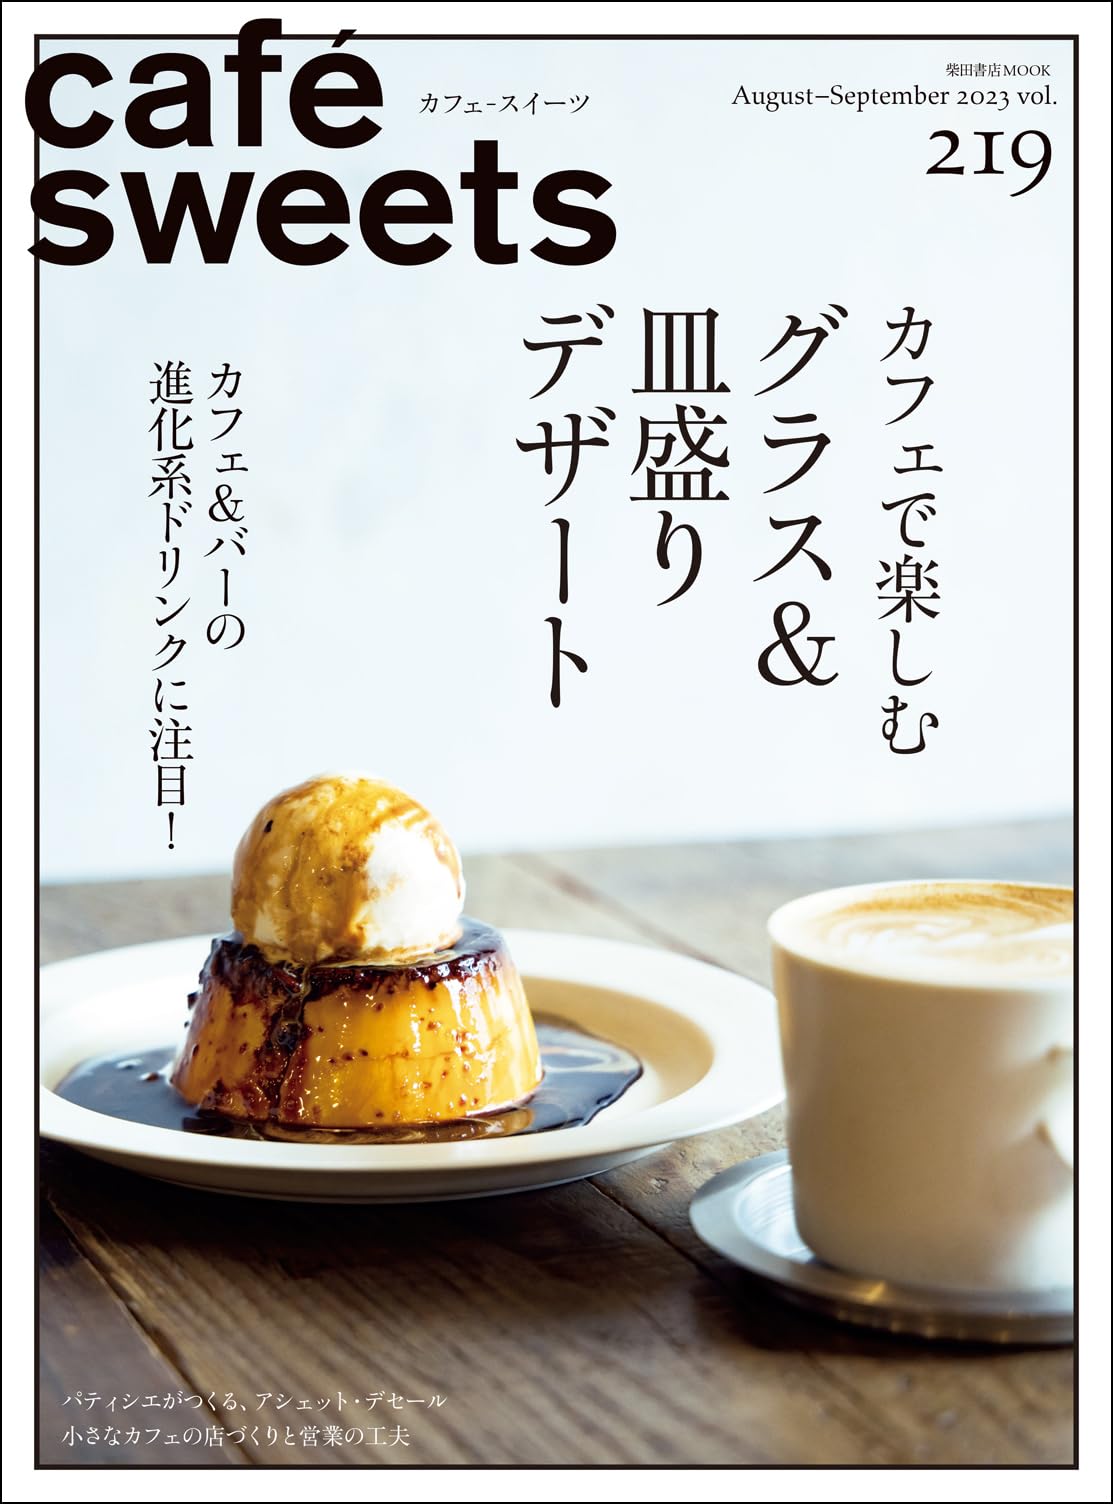 cafe-sweets(カフェ-スイ-ツ) vol.219 (柴田書店MOOK)